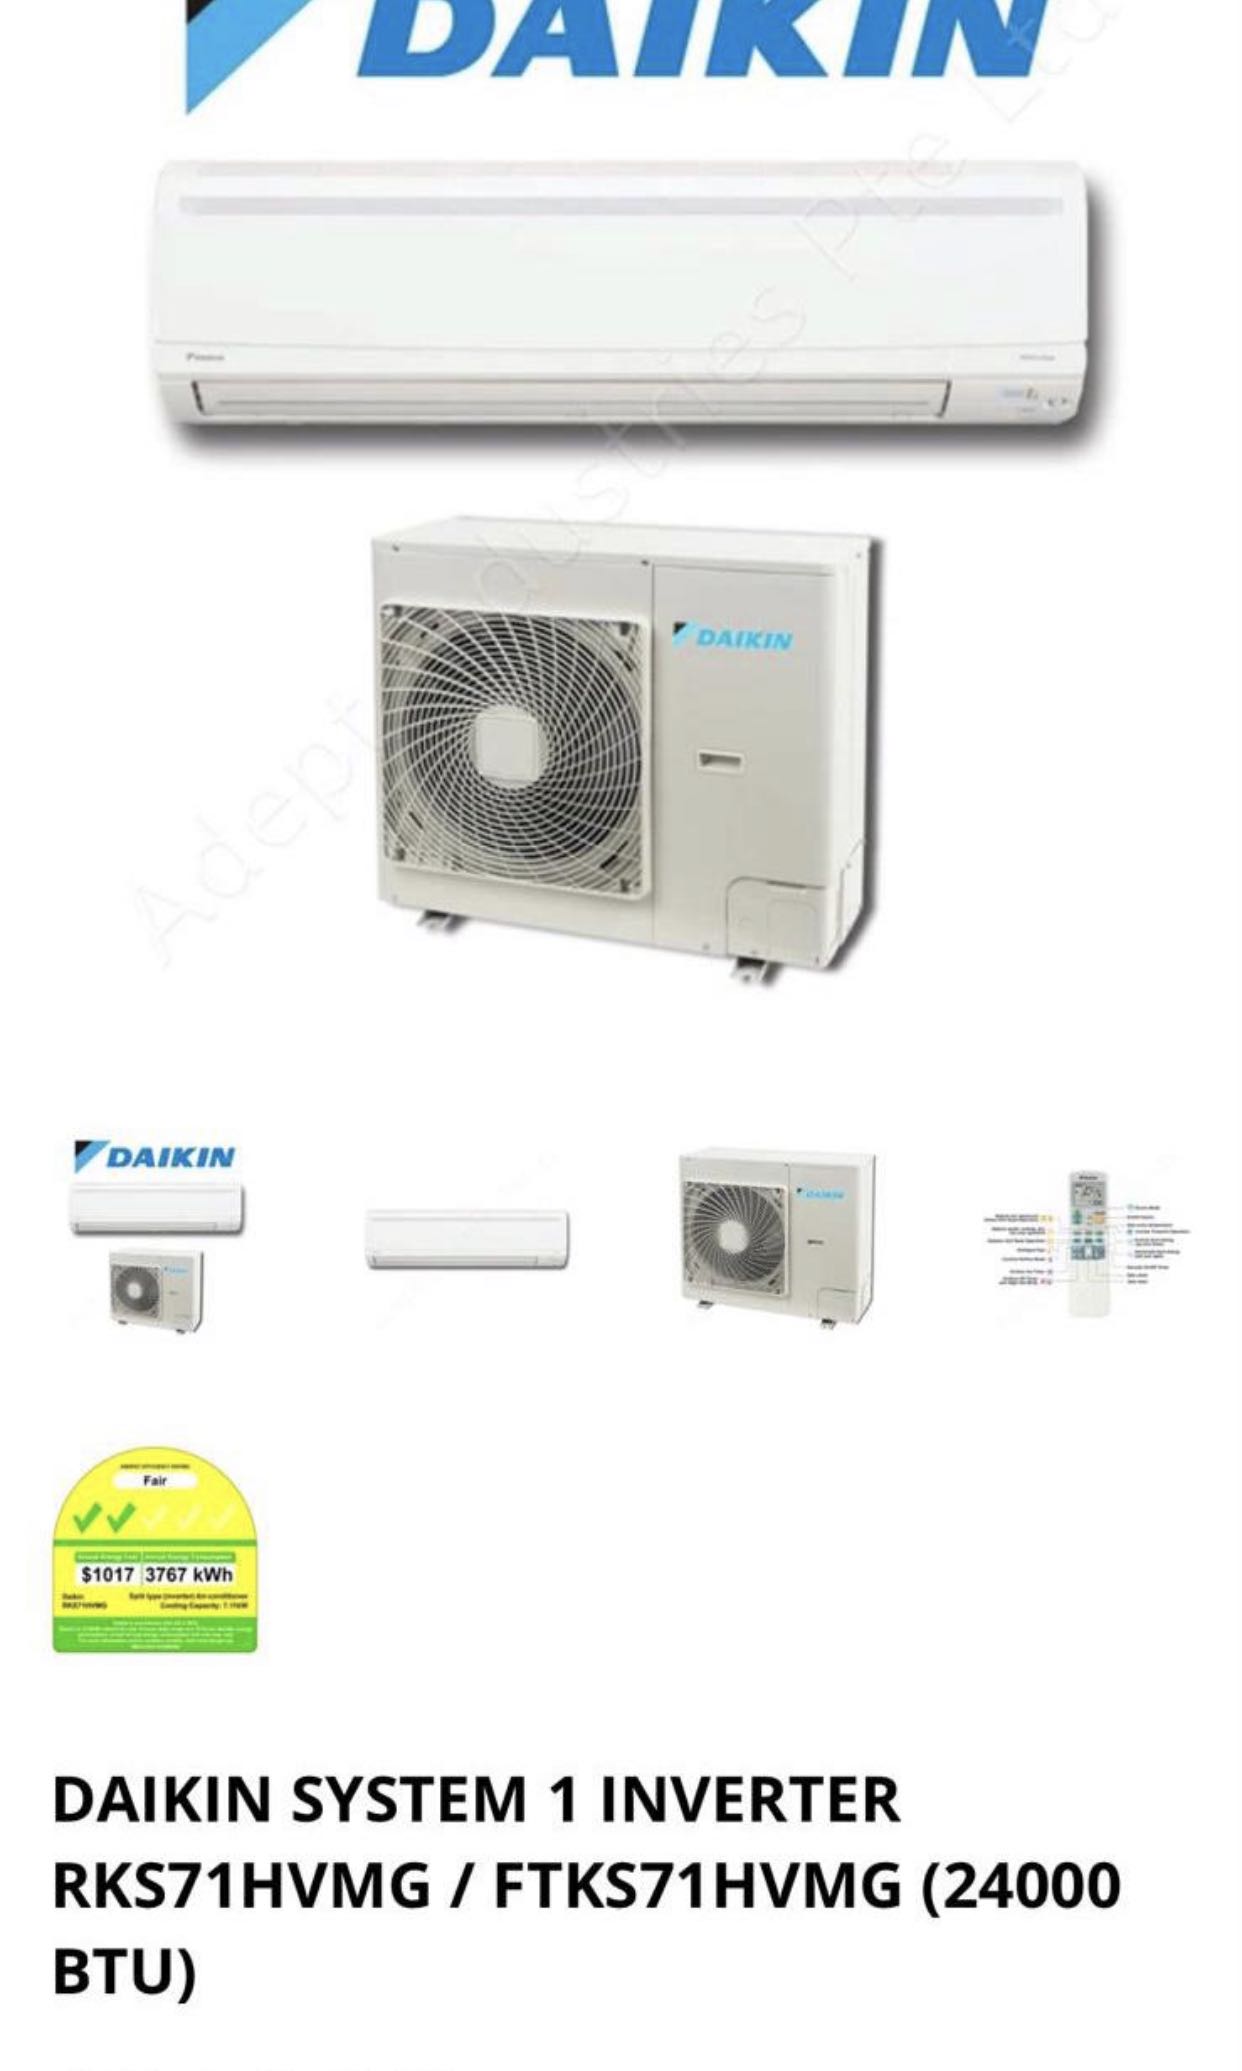 Daikin System Inverter Tv Home Appliances Air Conditioners